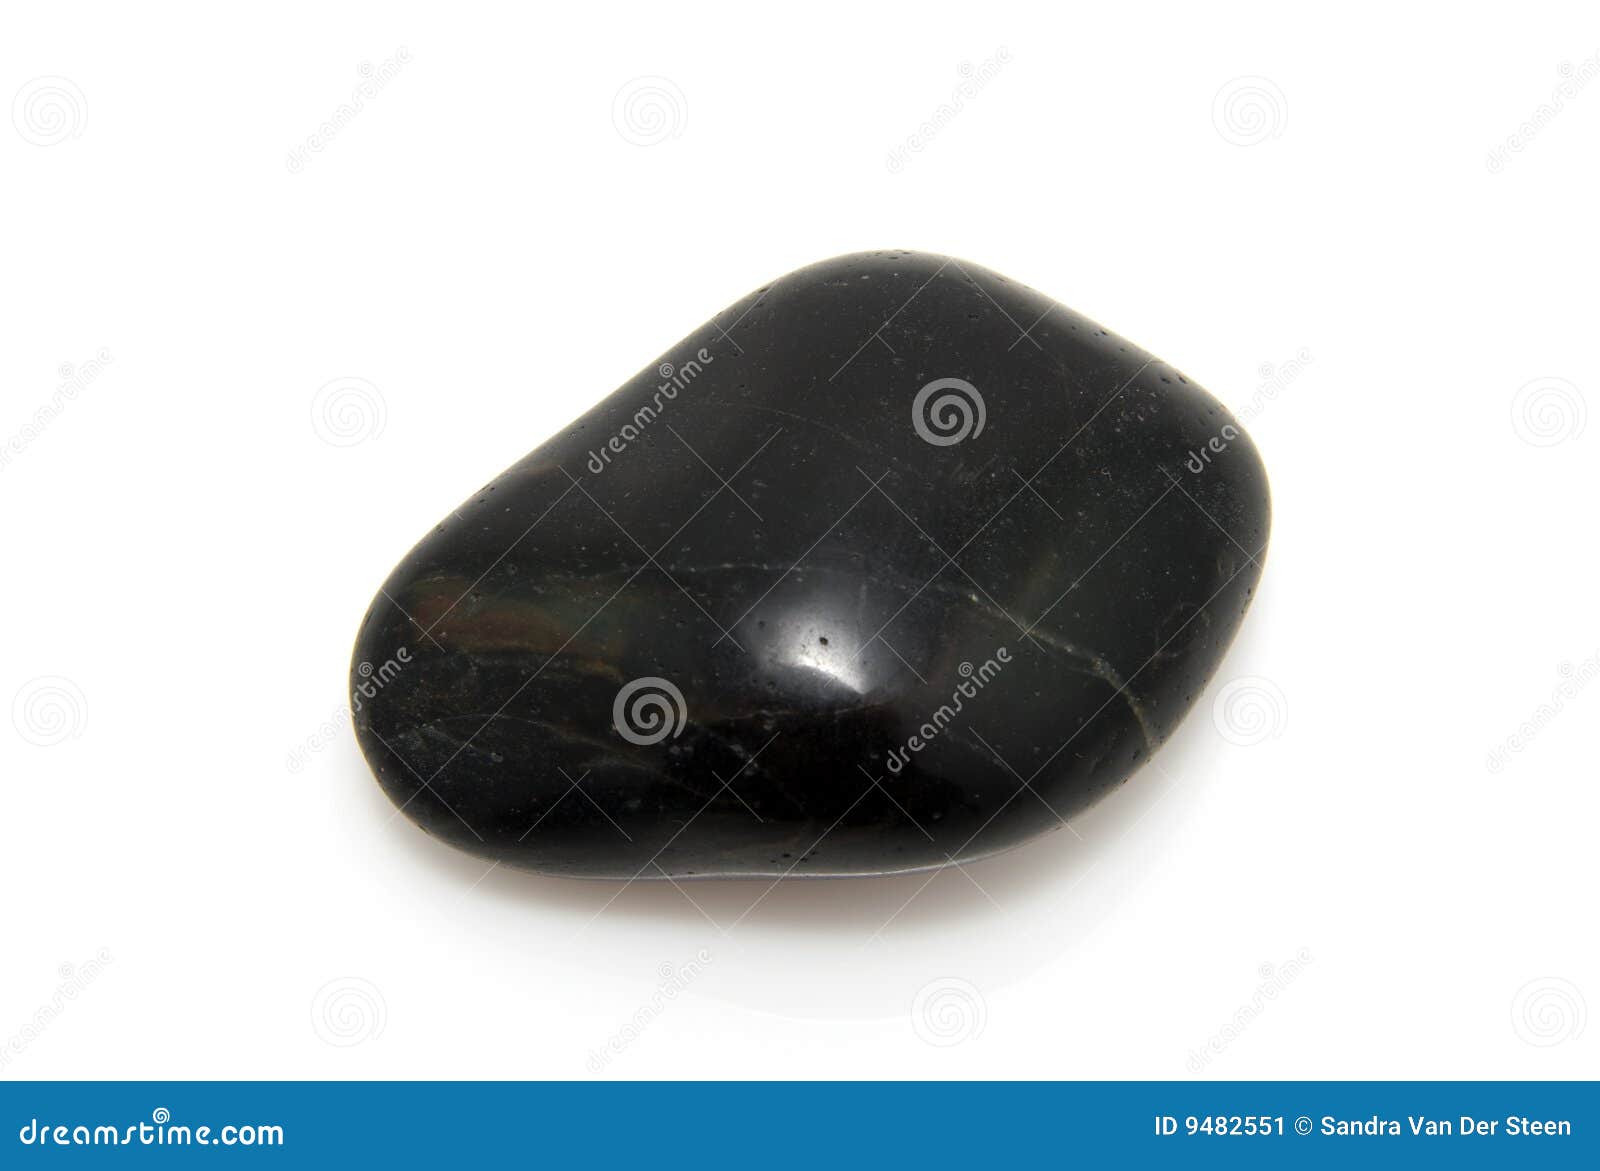 Initiatief consensus versieren Black stone stock image. Image of isolated, pure, simple - 9482551